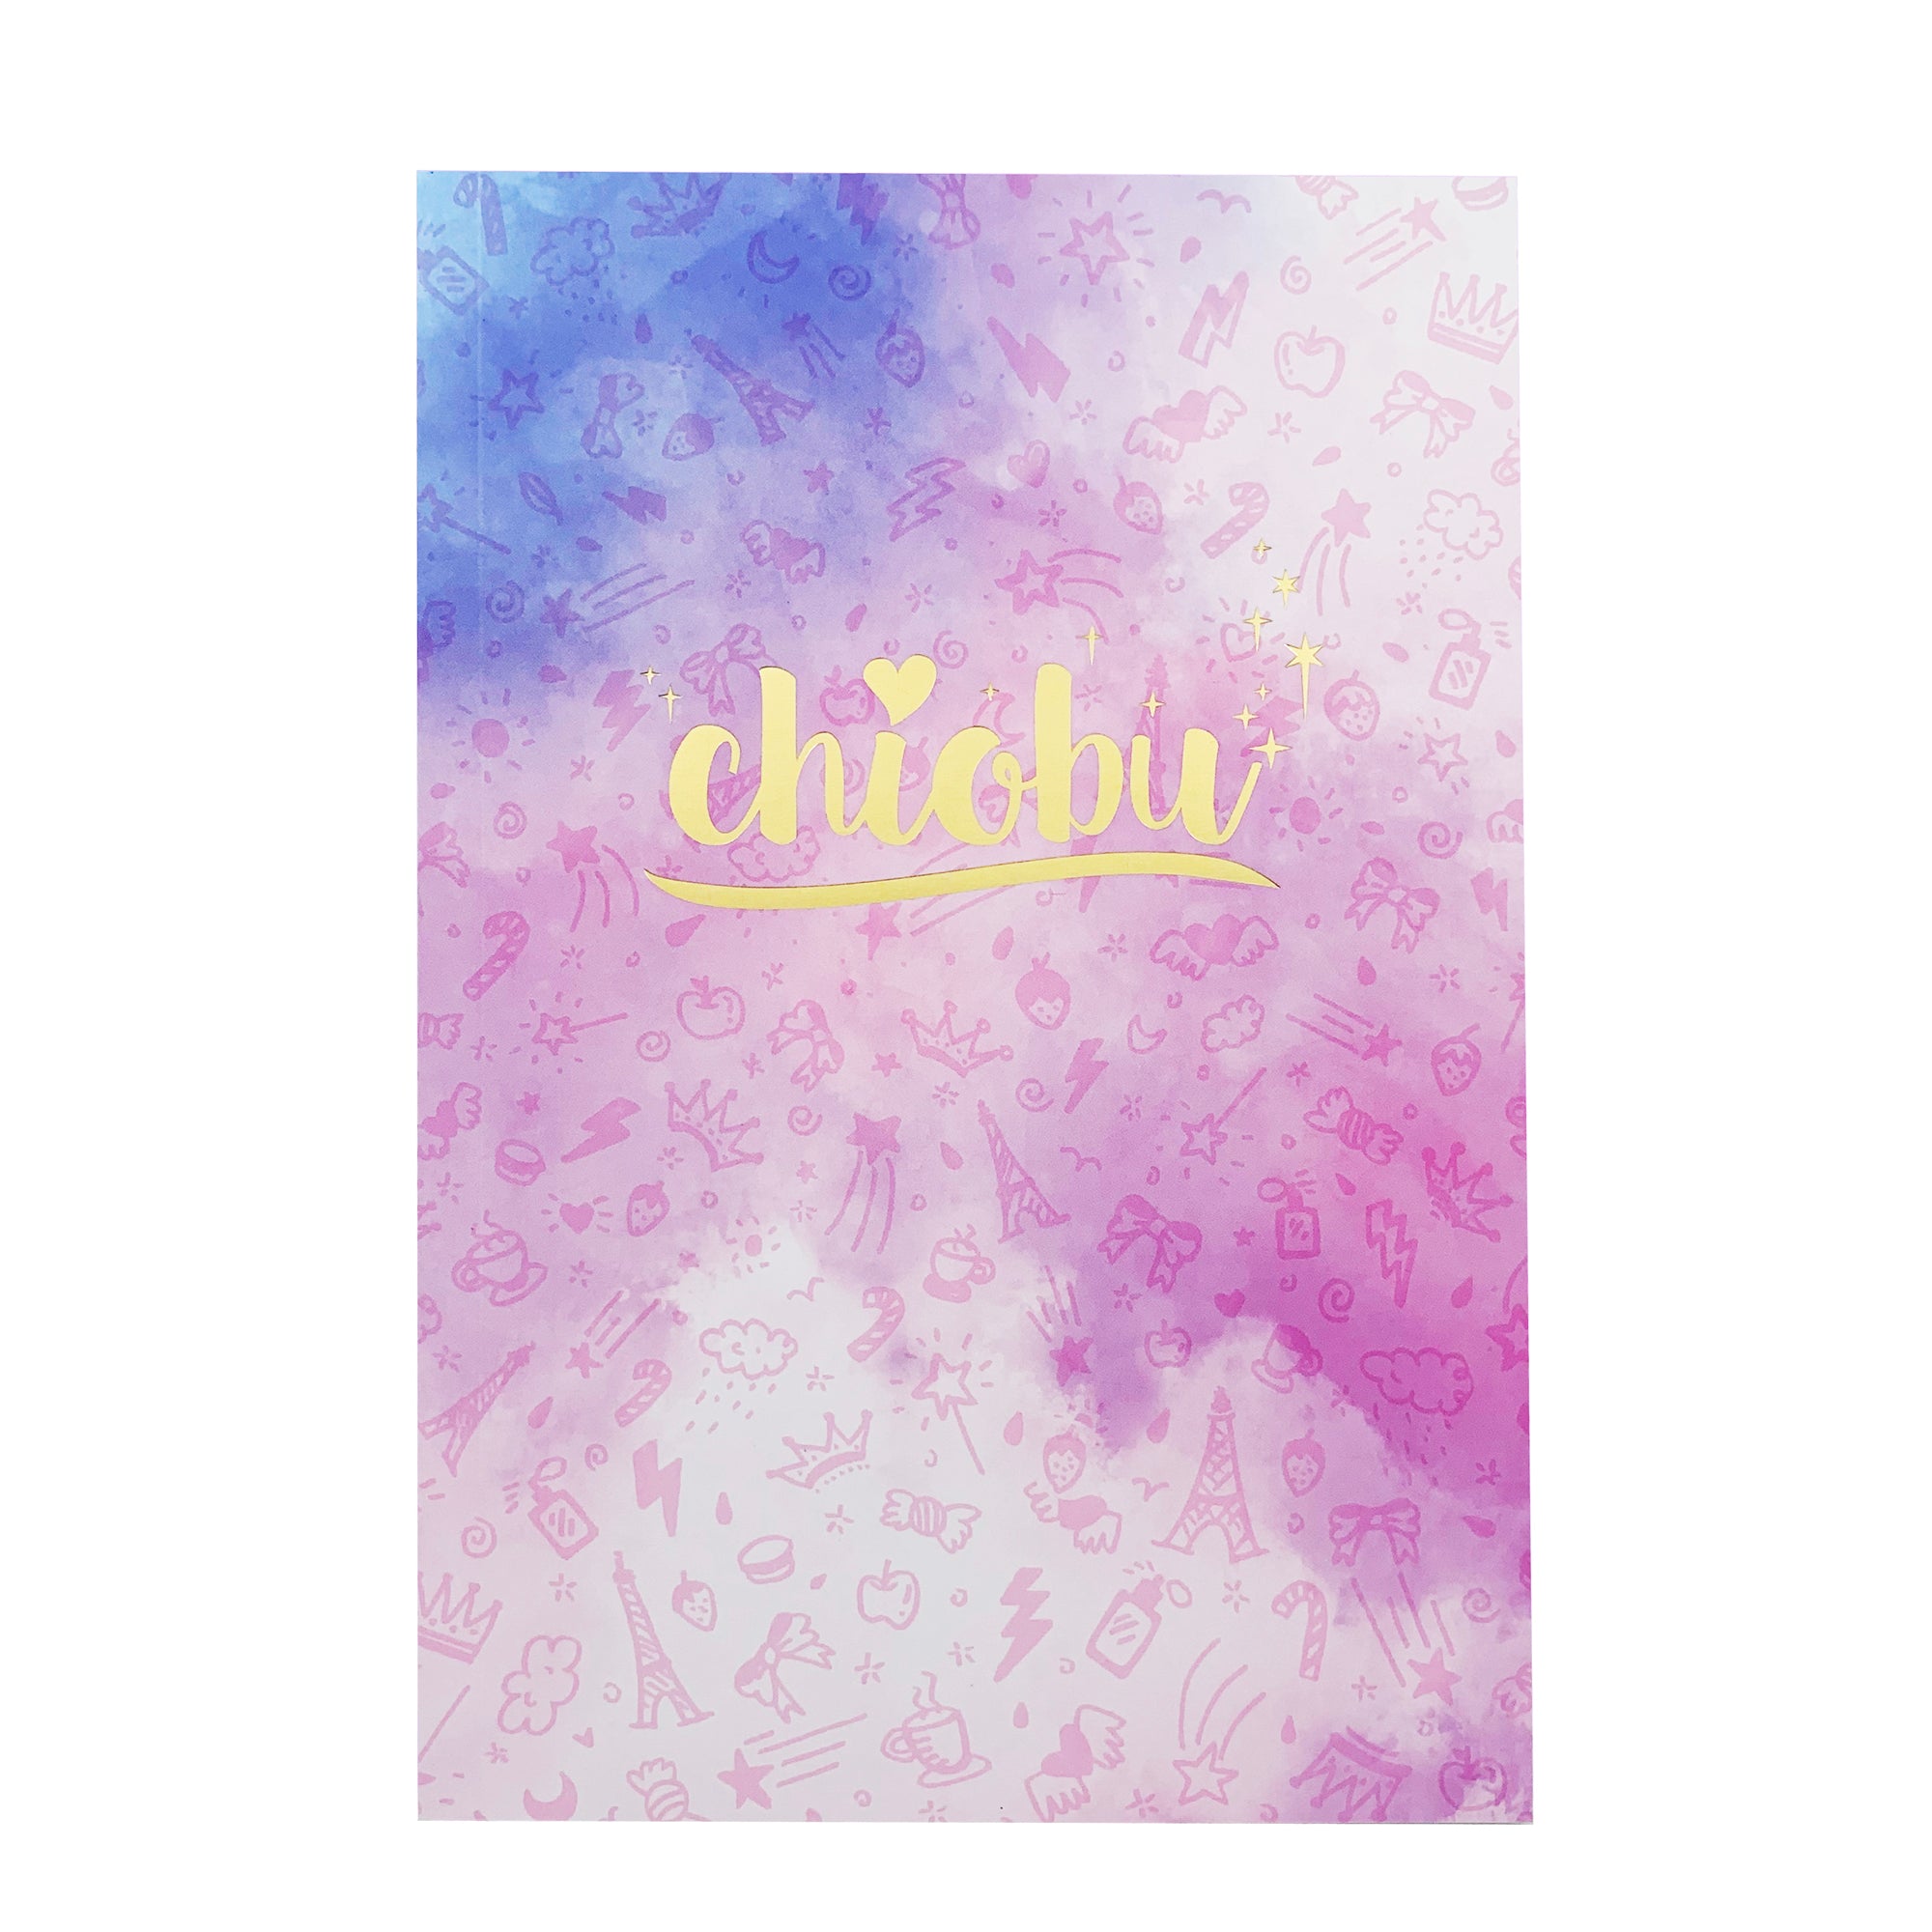 Notebook - Chiobu